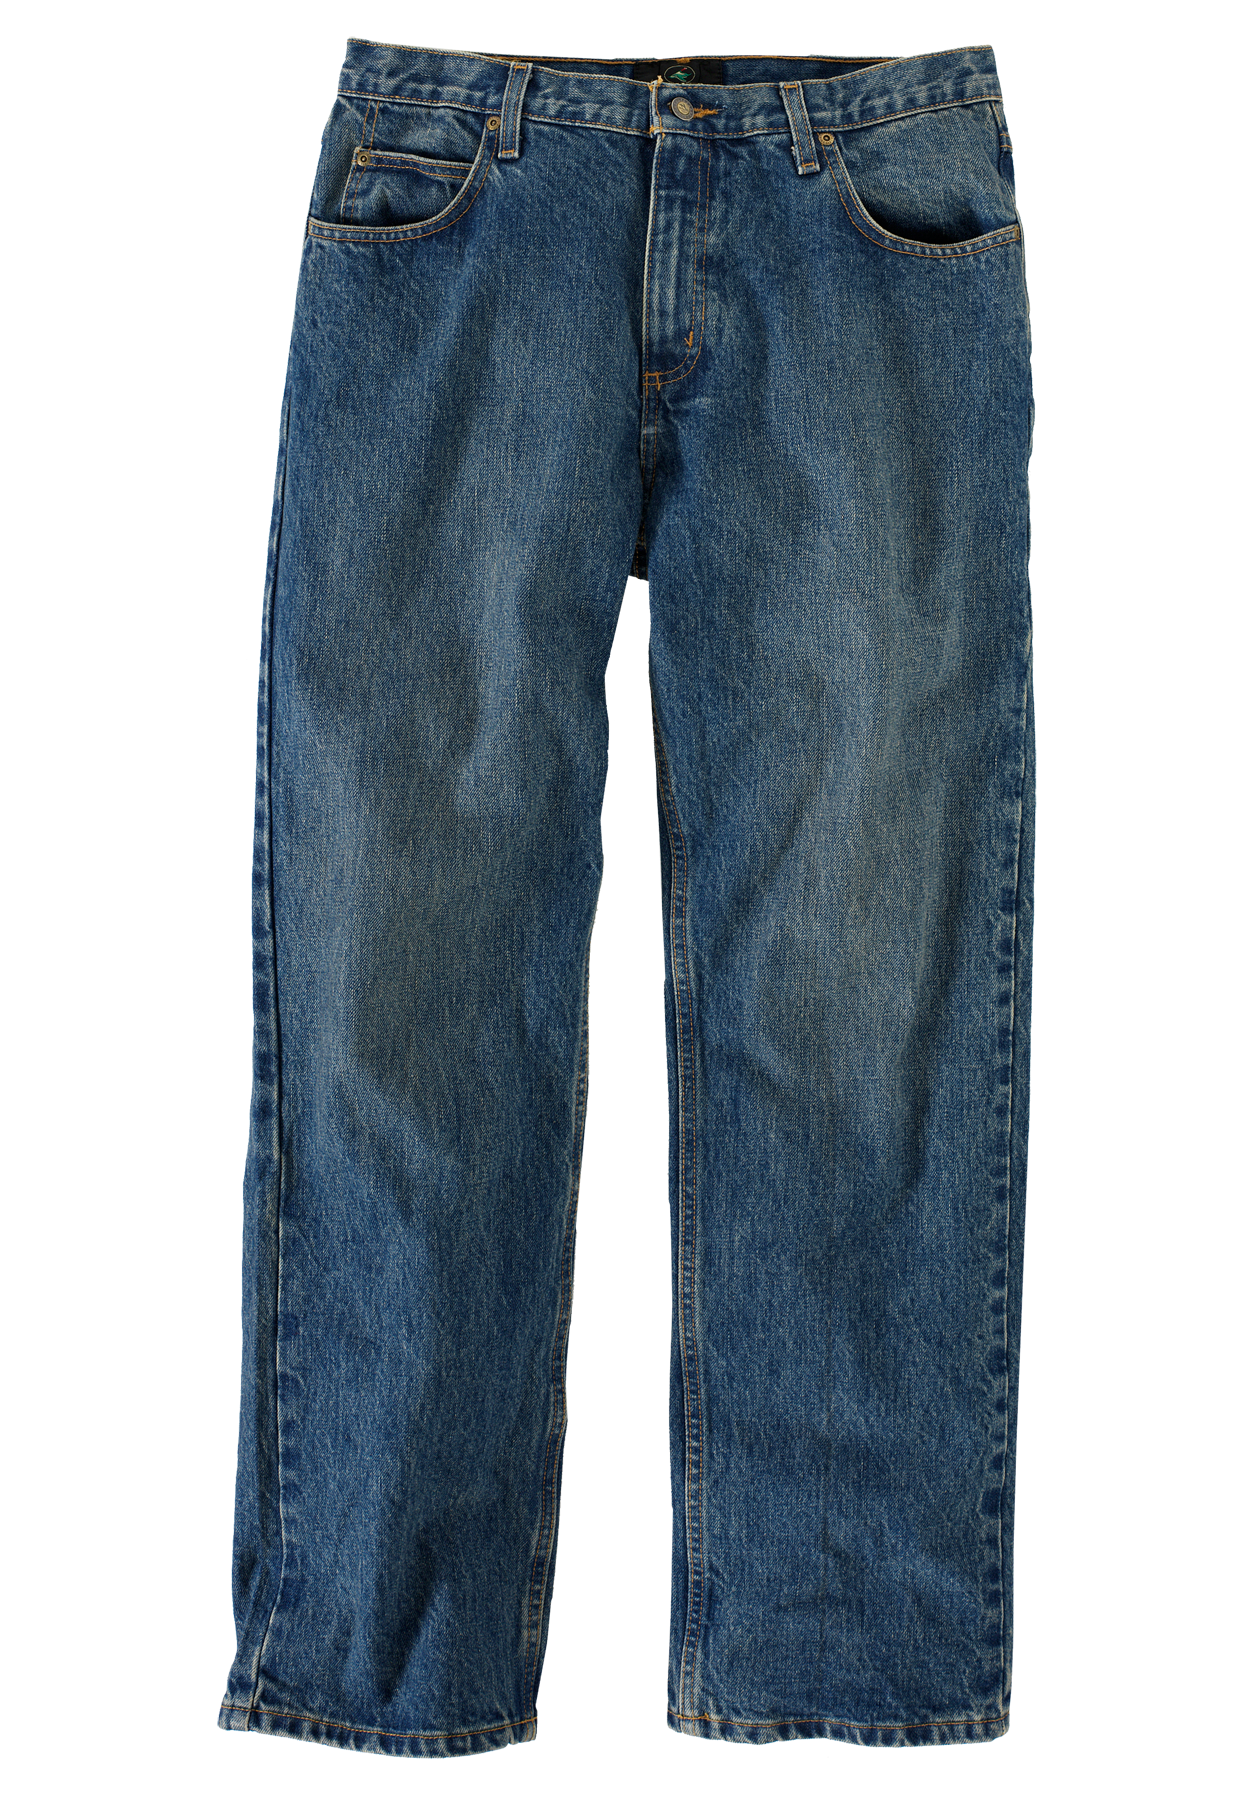 RedHead Easy Fit 5-Pocket Denim Jeans for Men | Bass Pro Shops